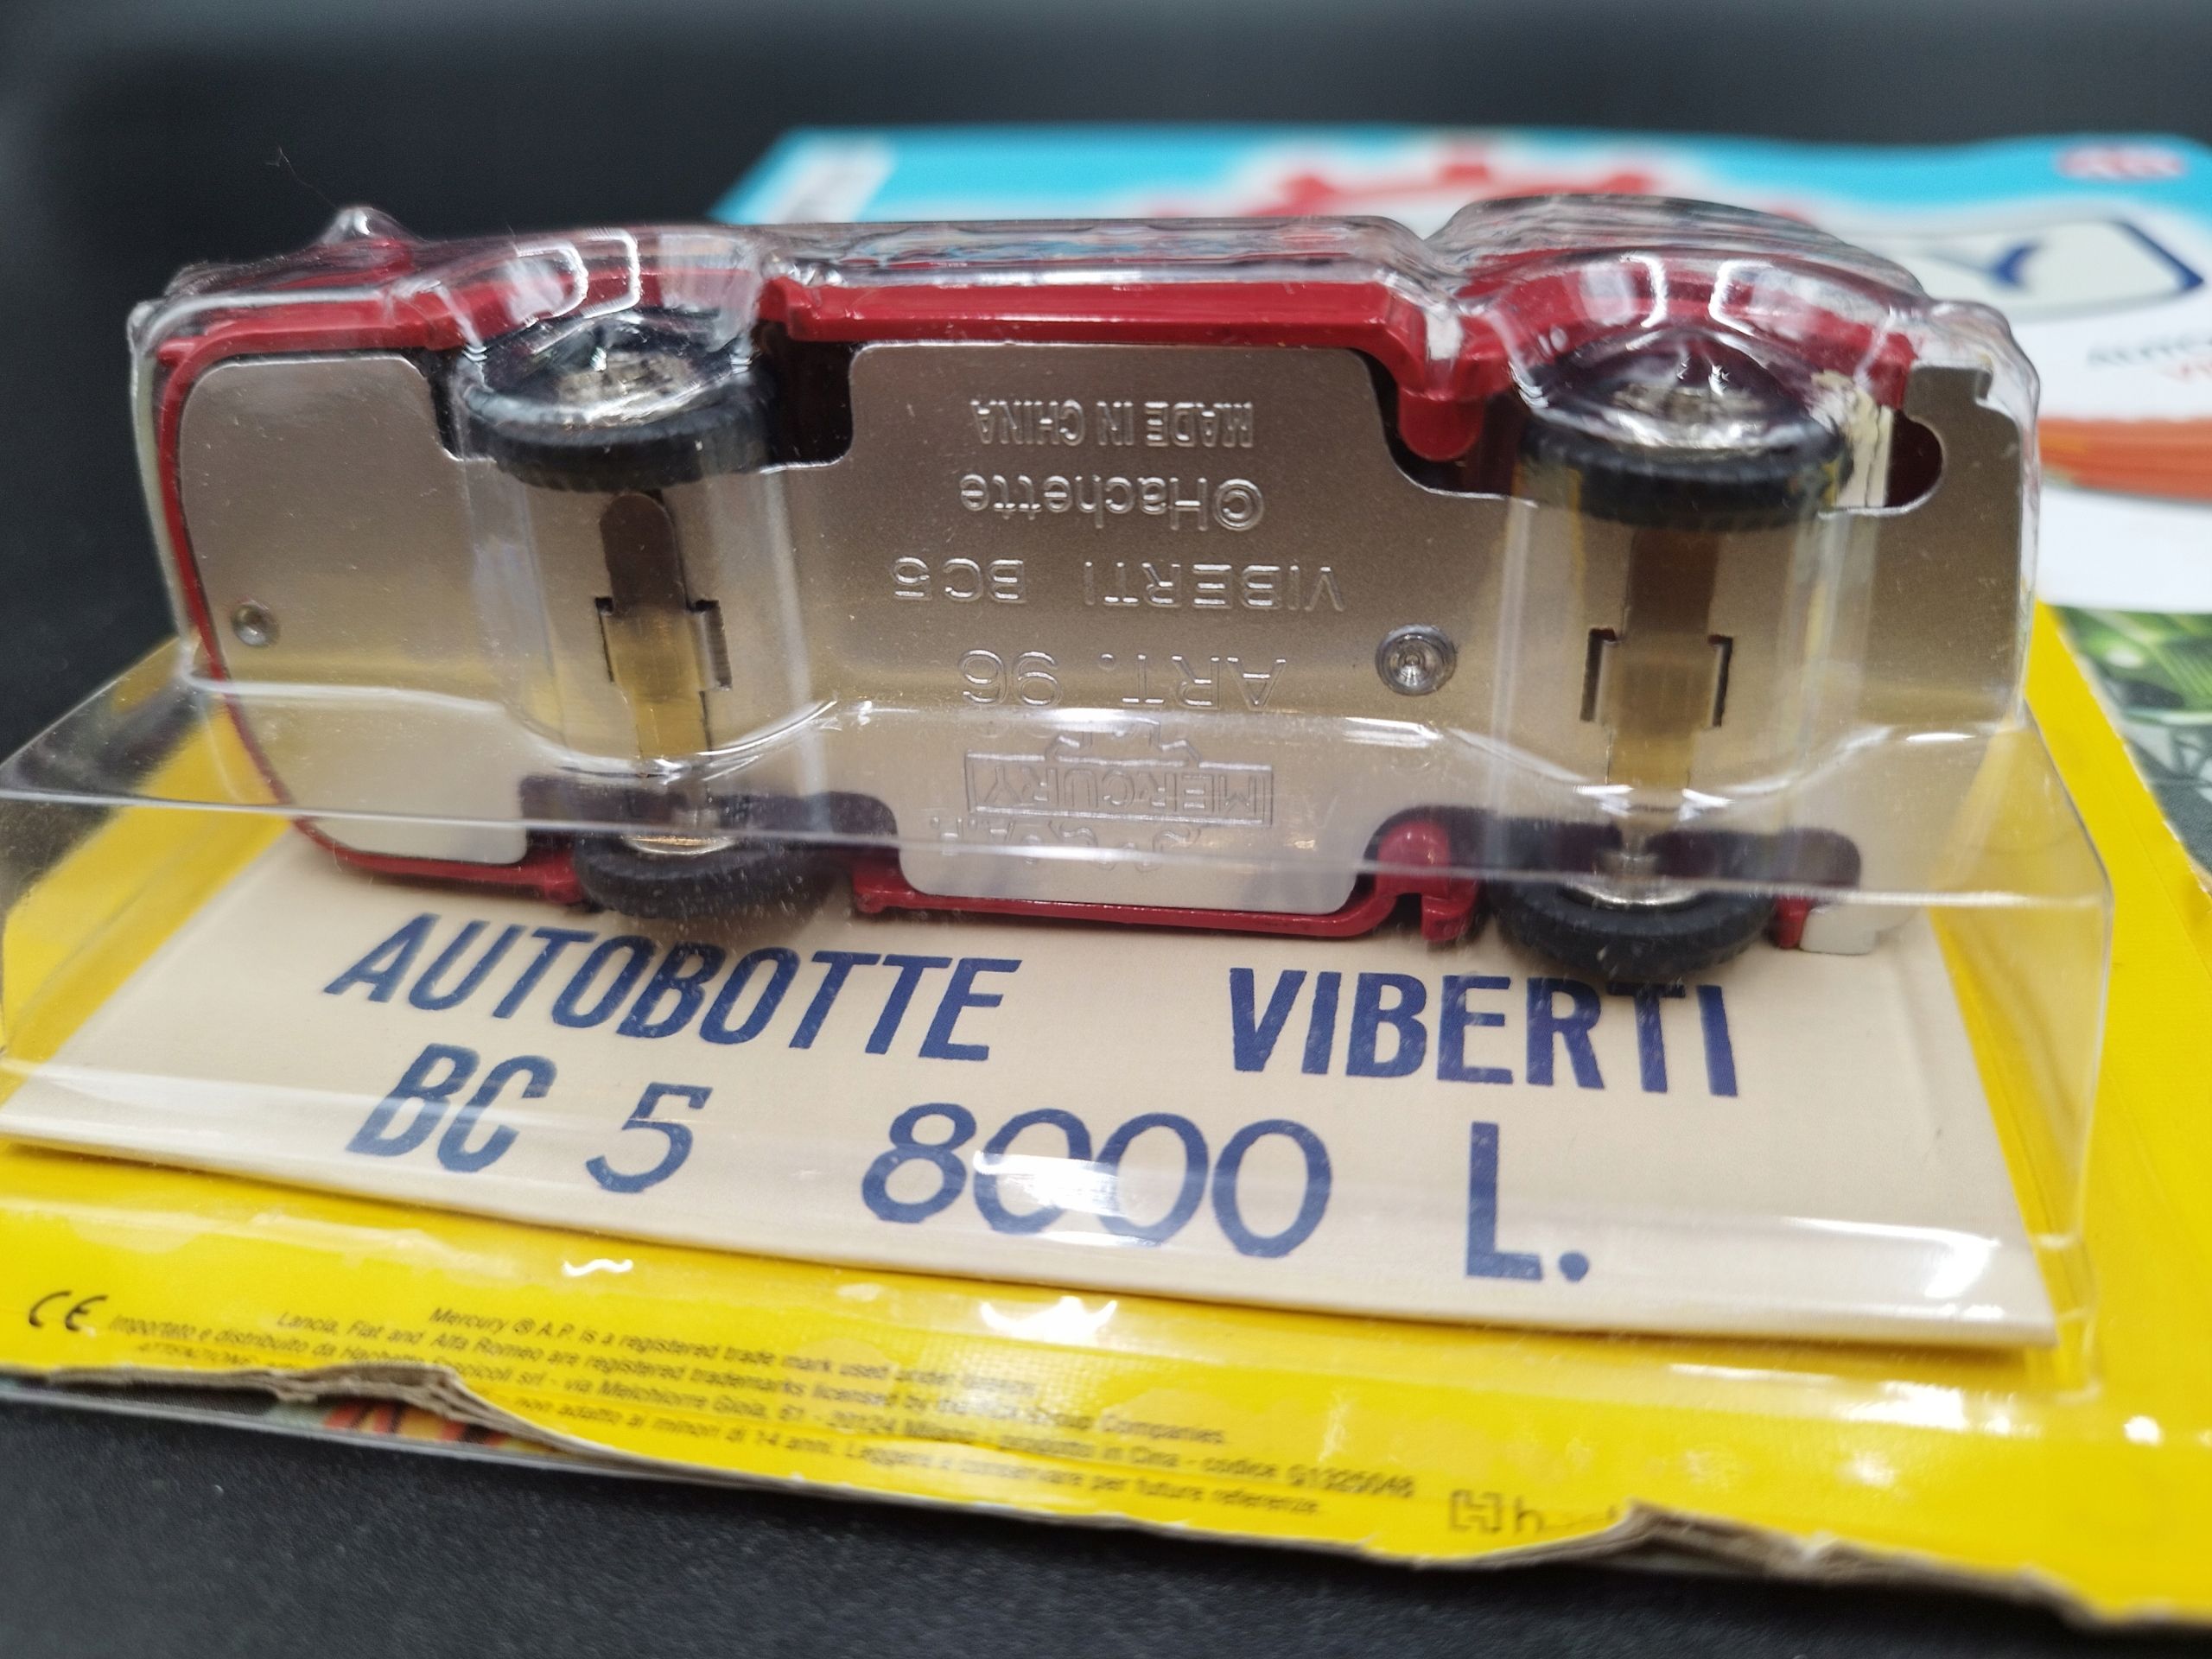 Model Hachette ok1:43 nr 48 Autobotte Viberti